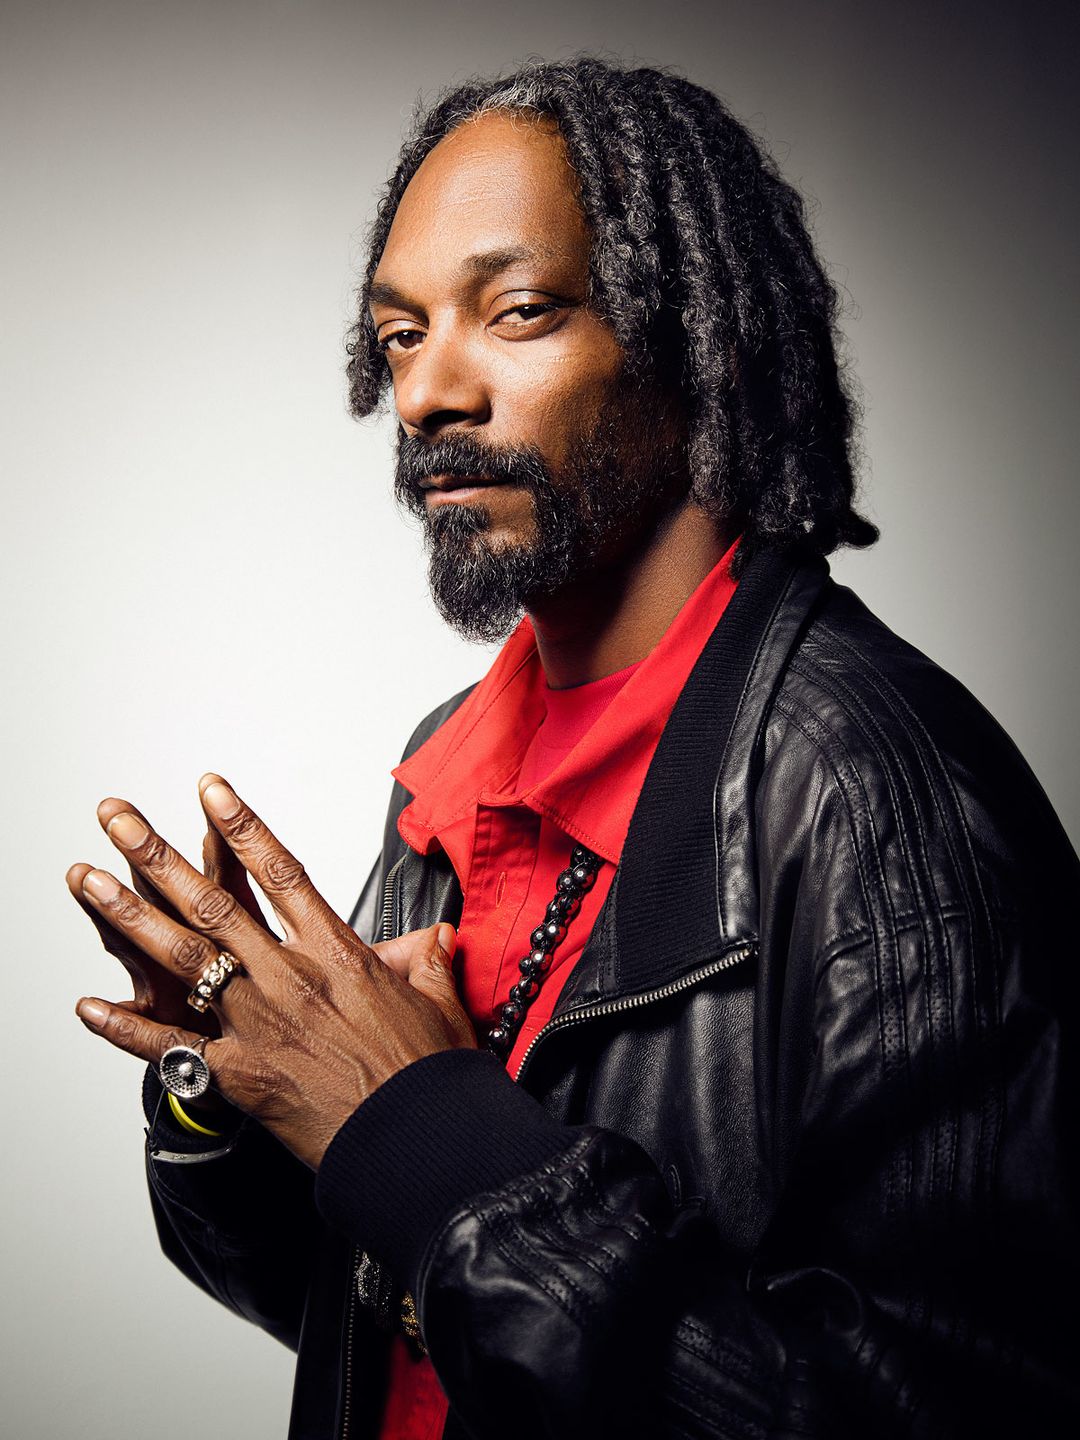 Snoop Dogg relationship